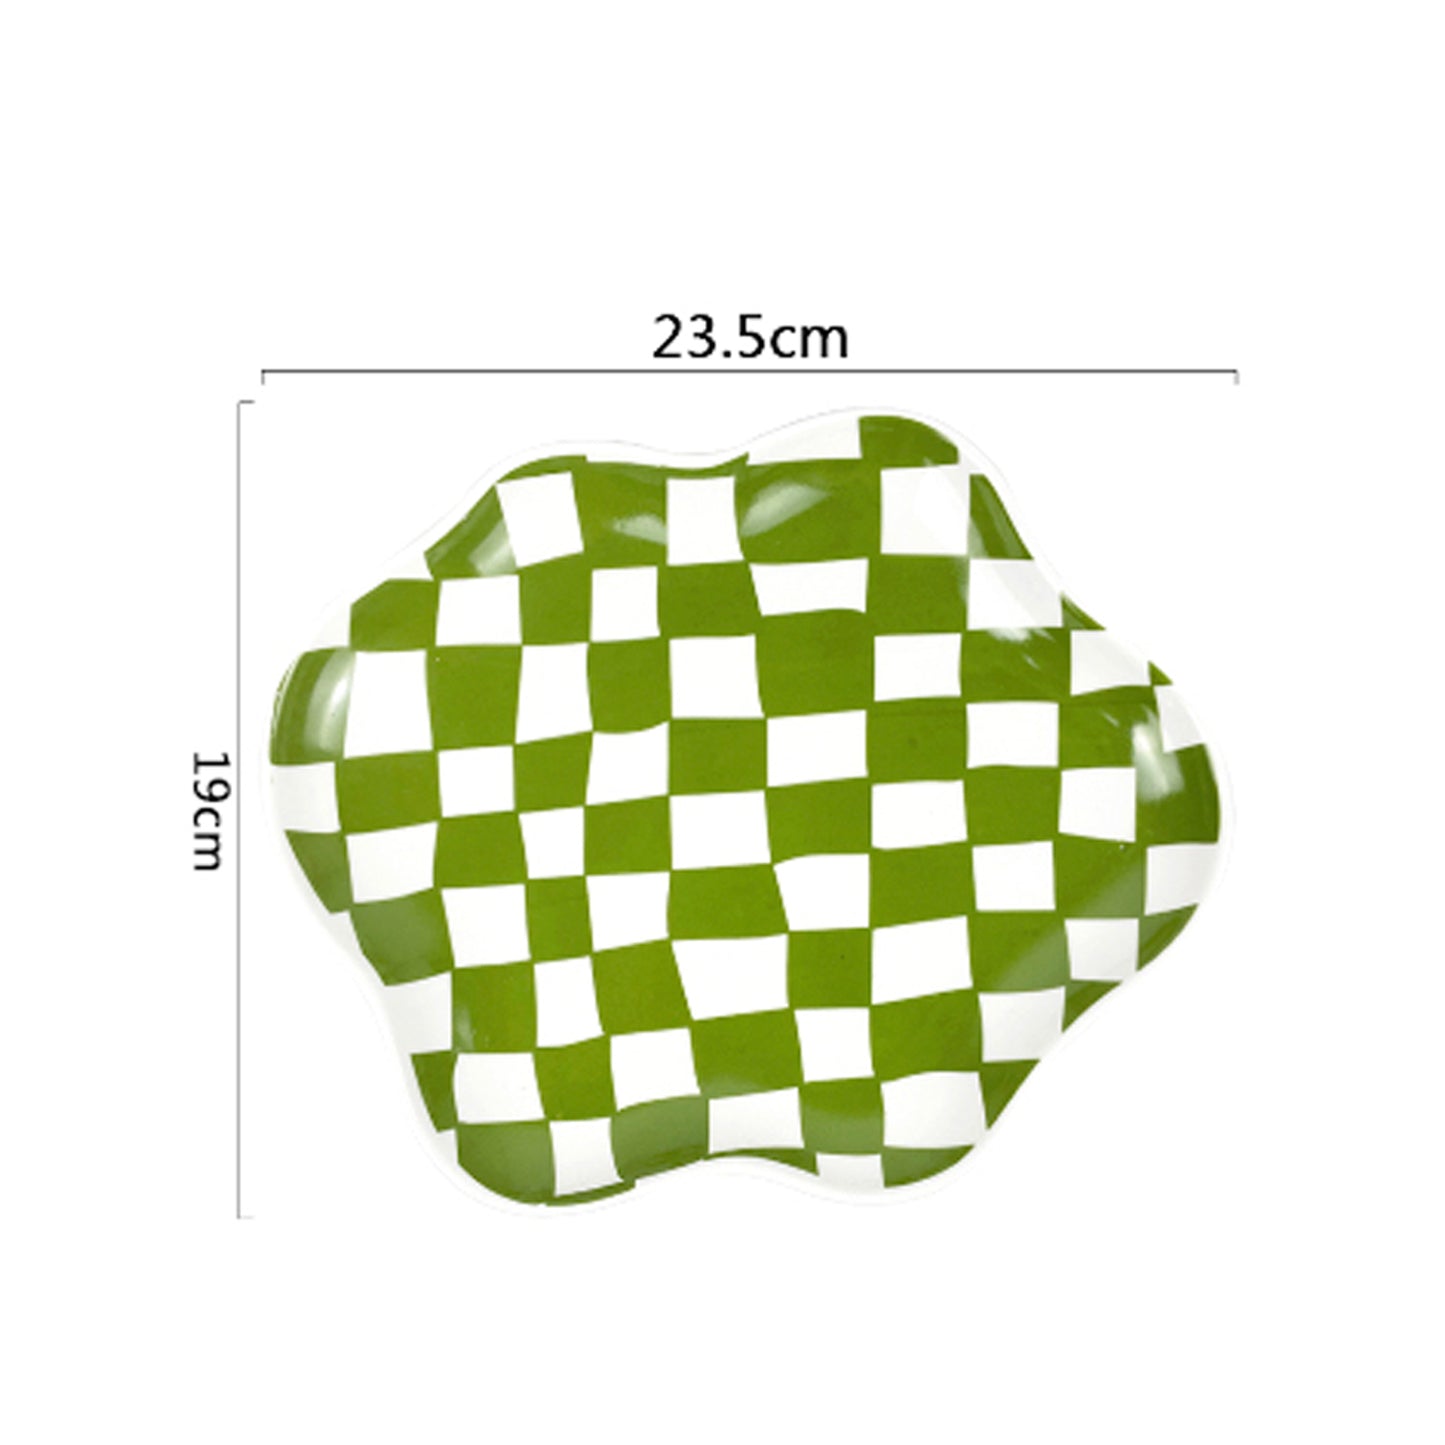 Ceramic Checkerboard Pattern Tray